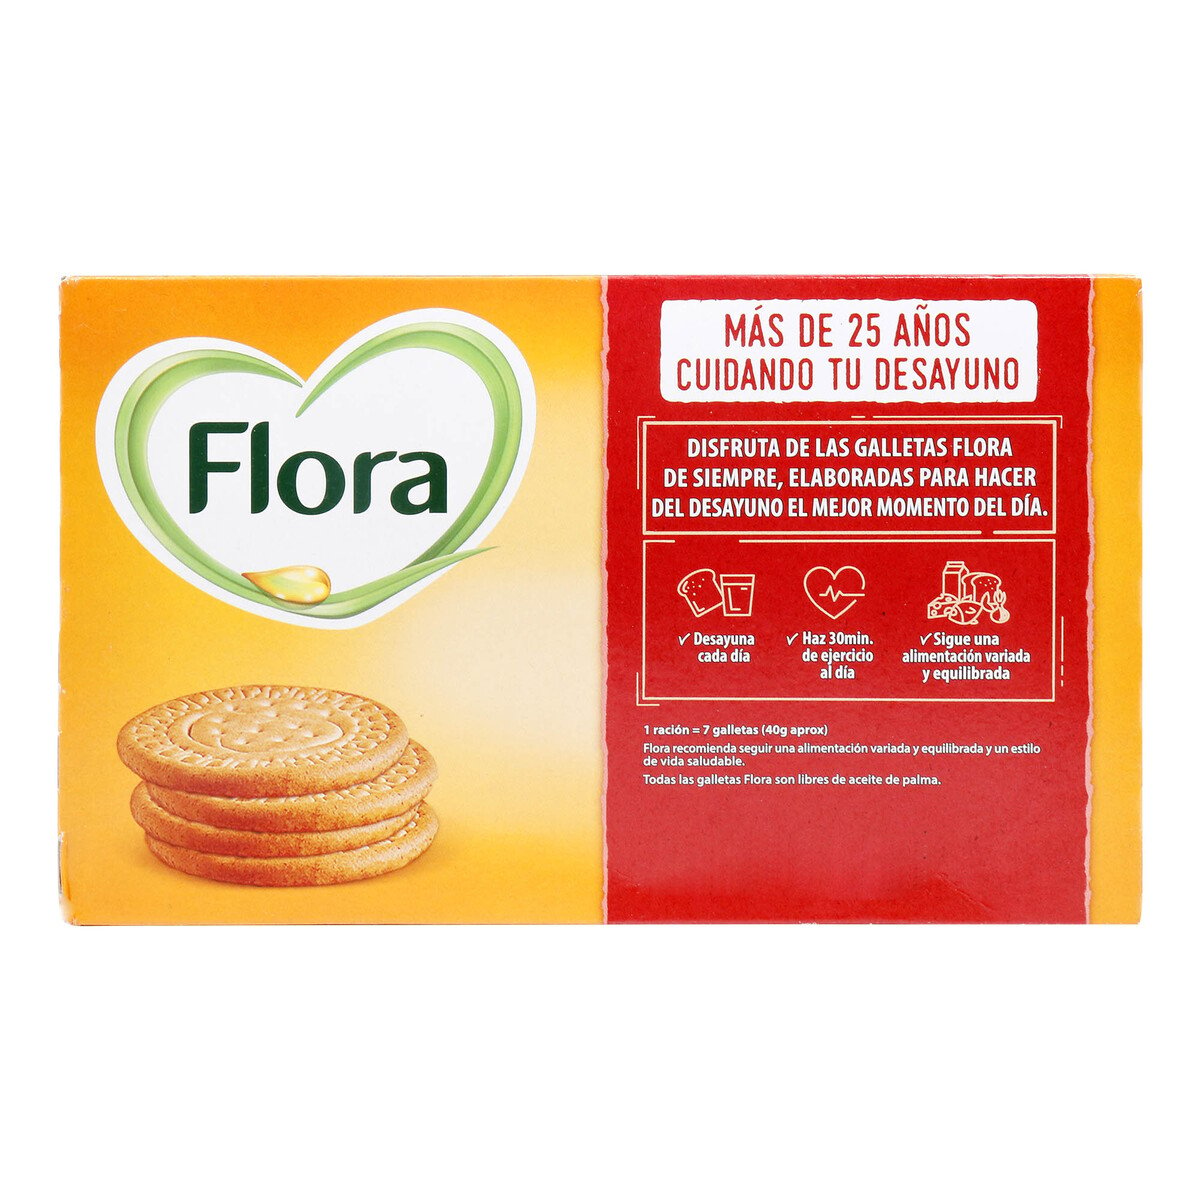 Flora Gold Maria Dorada Biscuit 400g